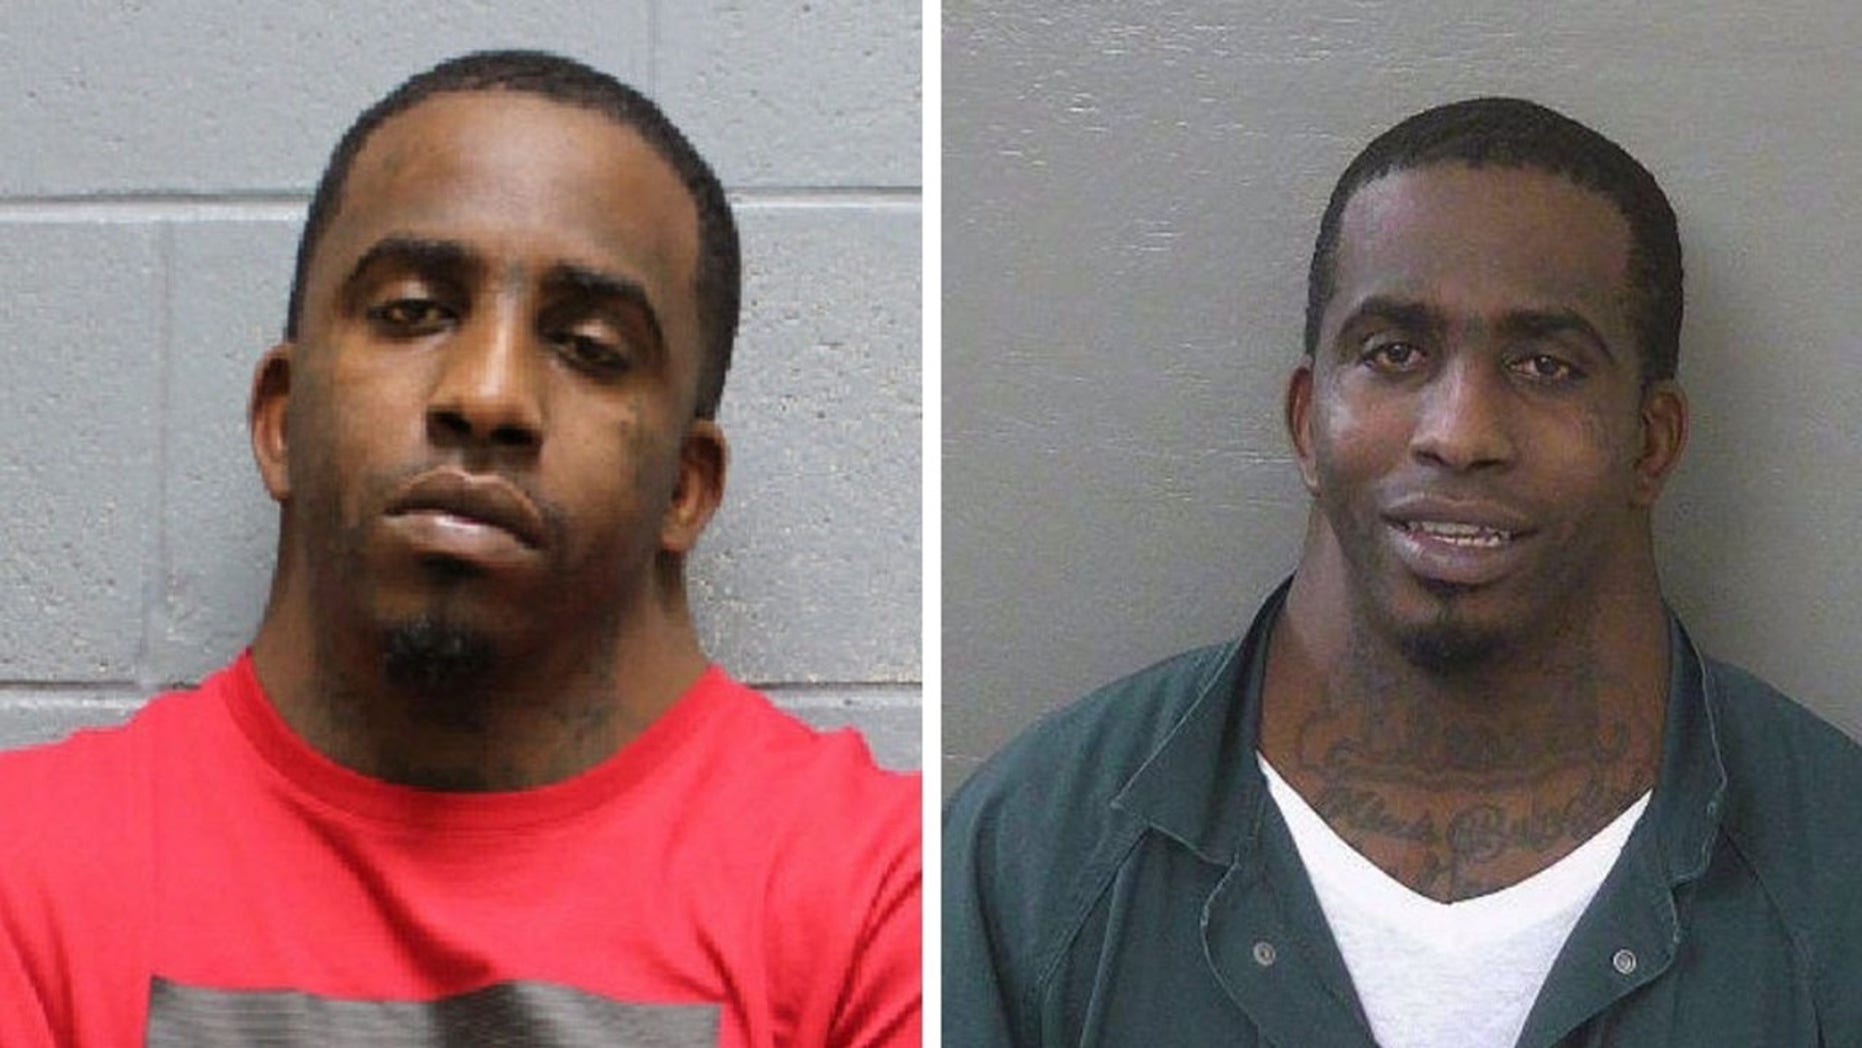 Charles Dion McDowell, whose mugshot (left) became viral, was arrested again.